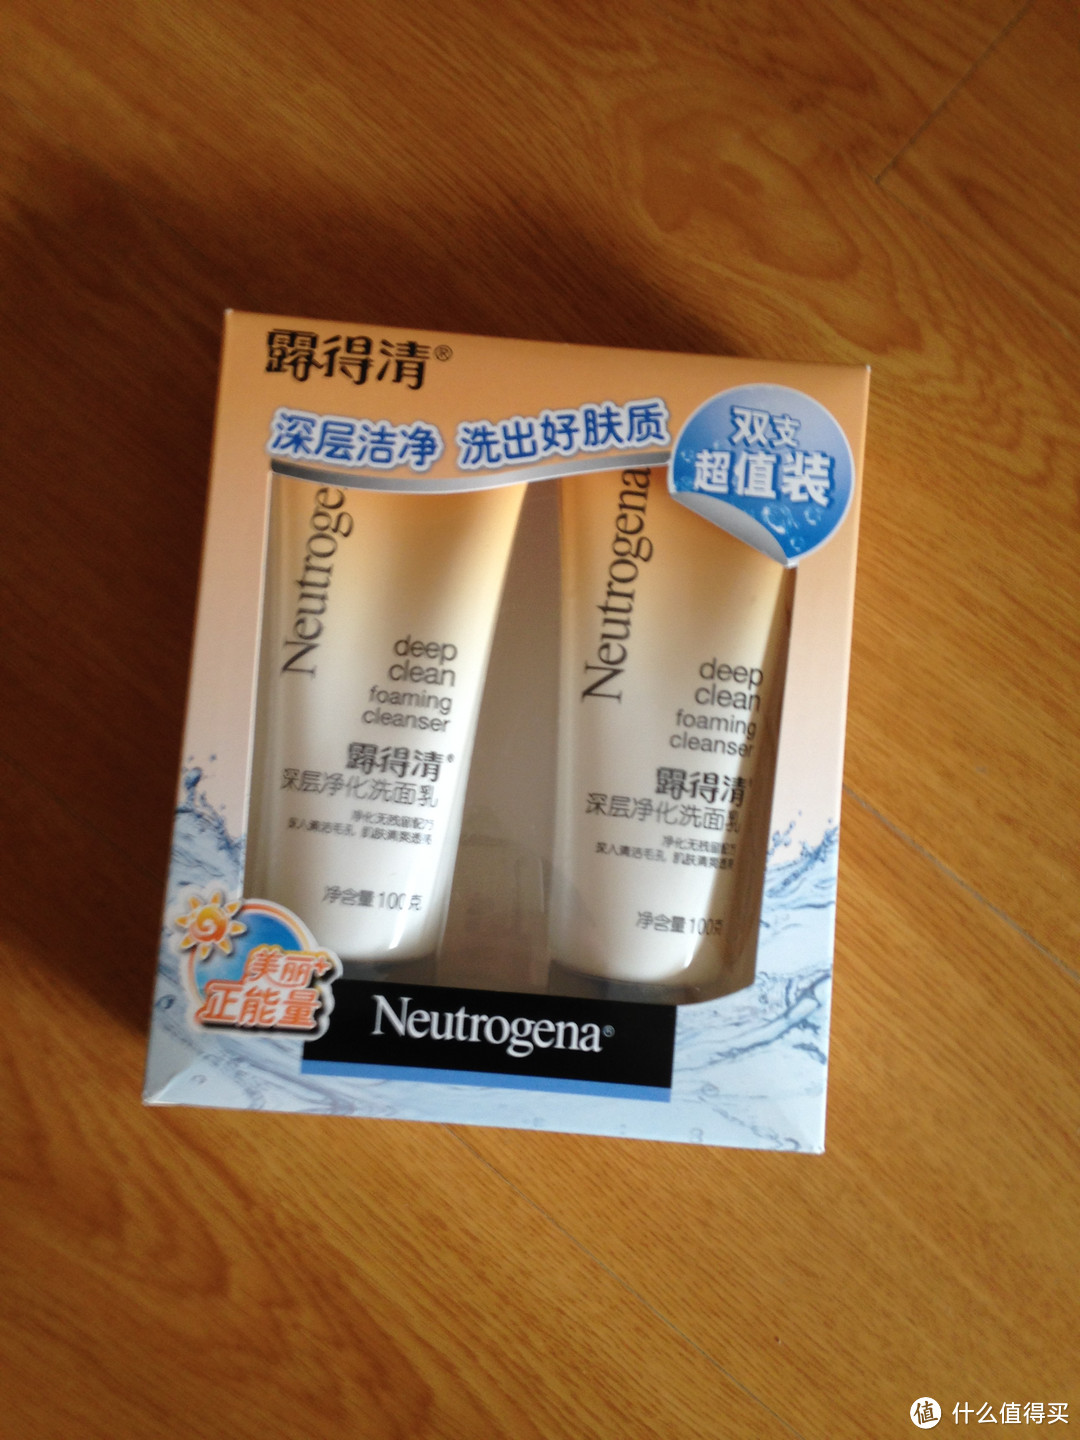 Neutrogena 露得清 深层净化洗面乳评测